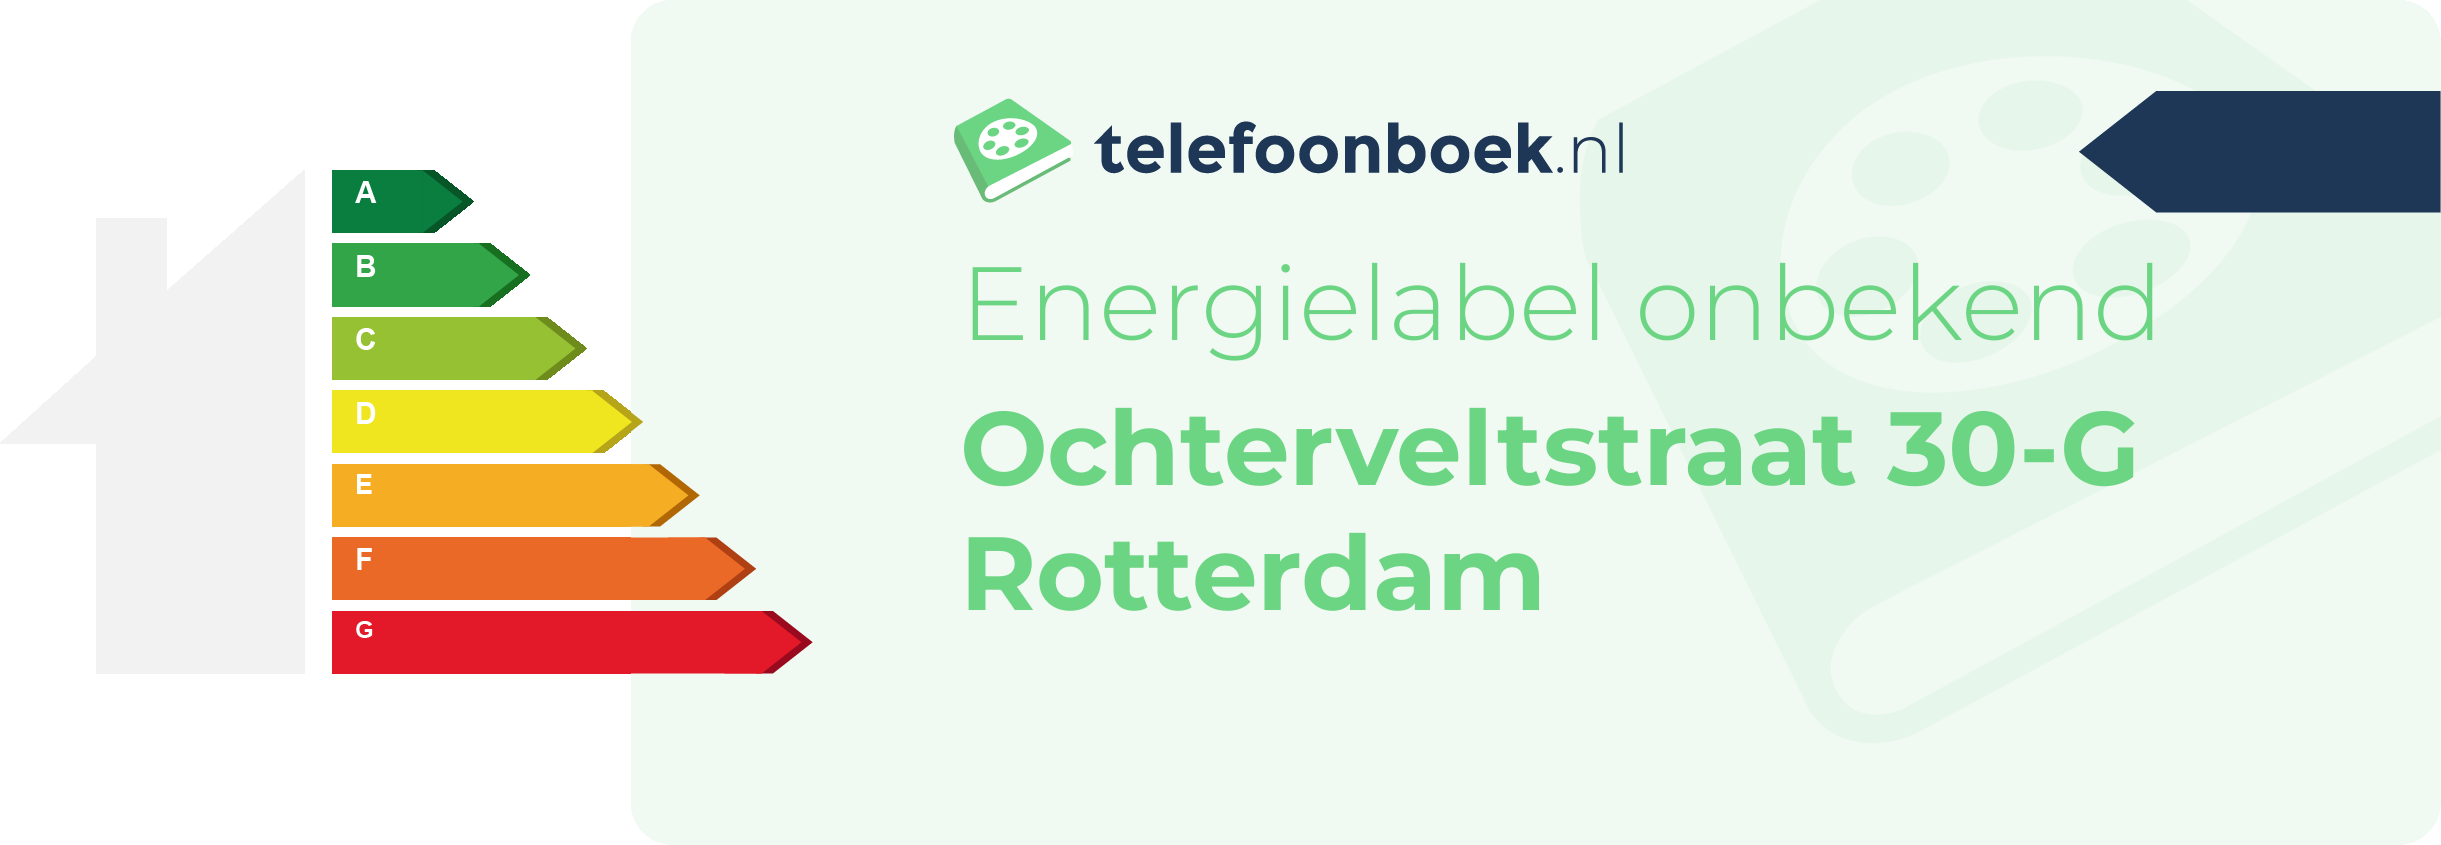 Energielabel Ochterveltstraat 30-G Rotterdam